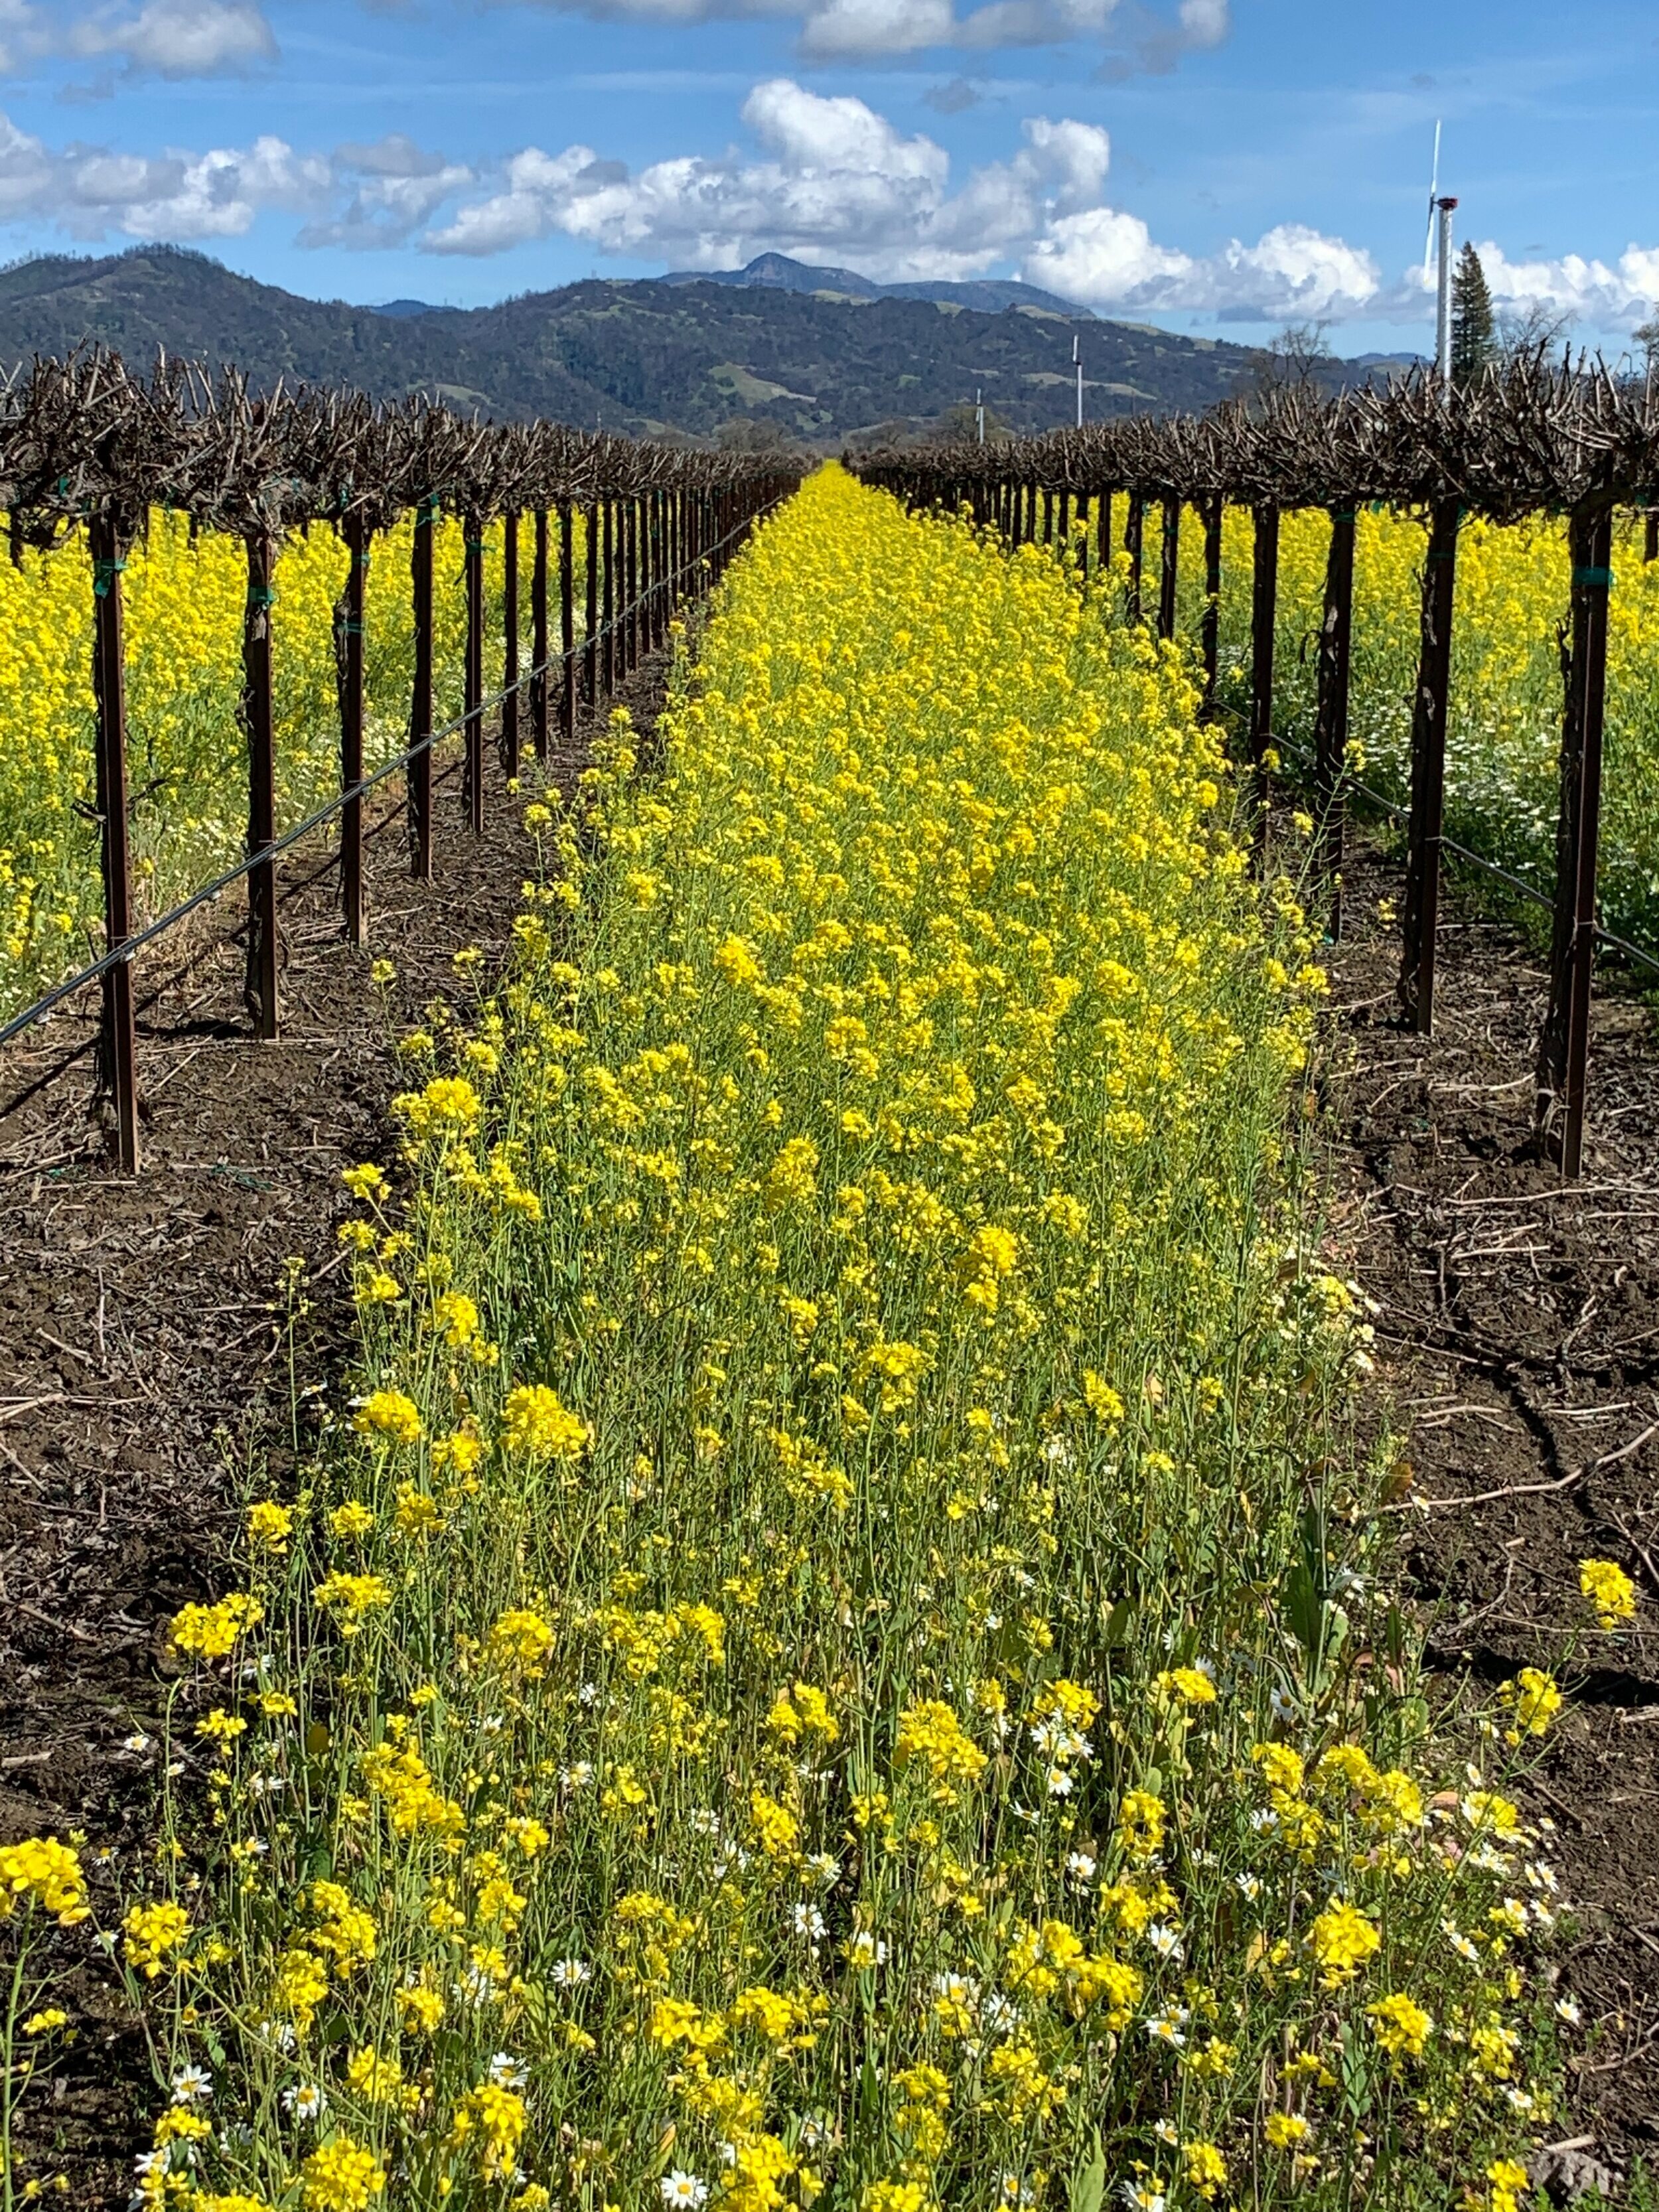 Cover crop between vines in Sonoma